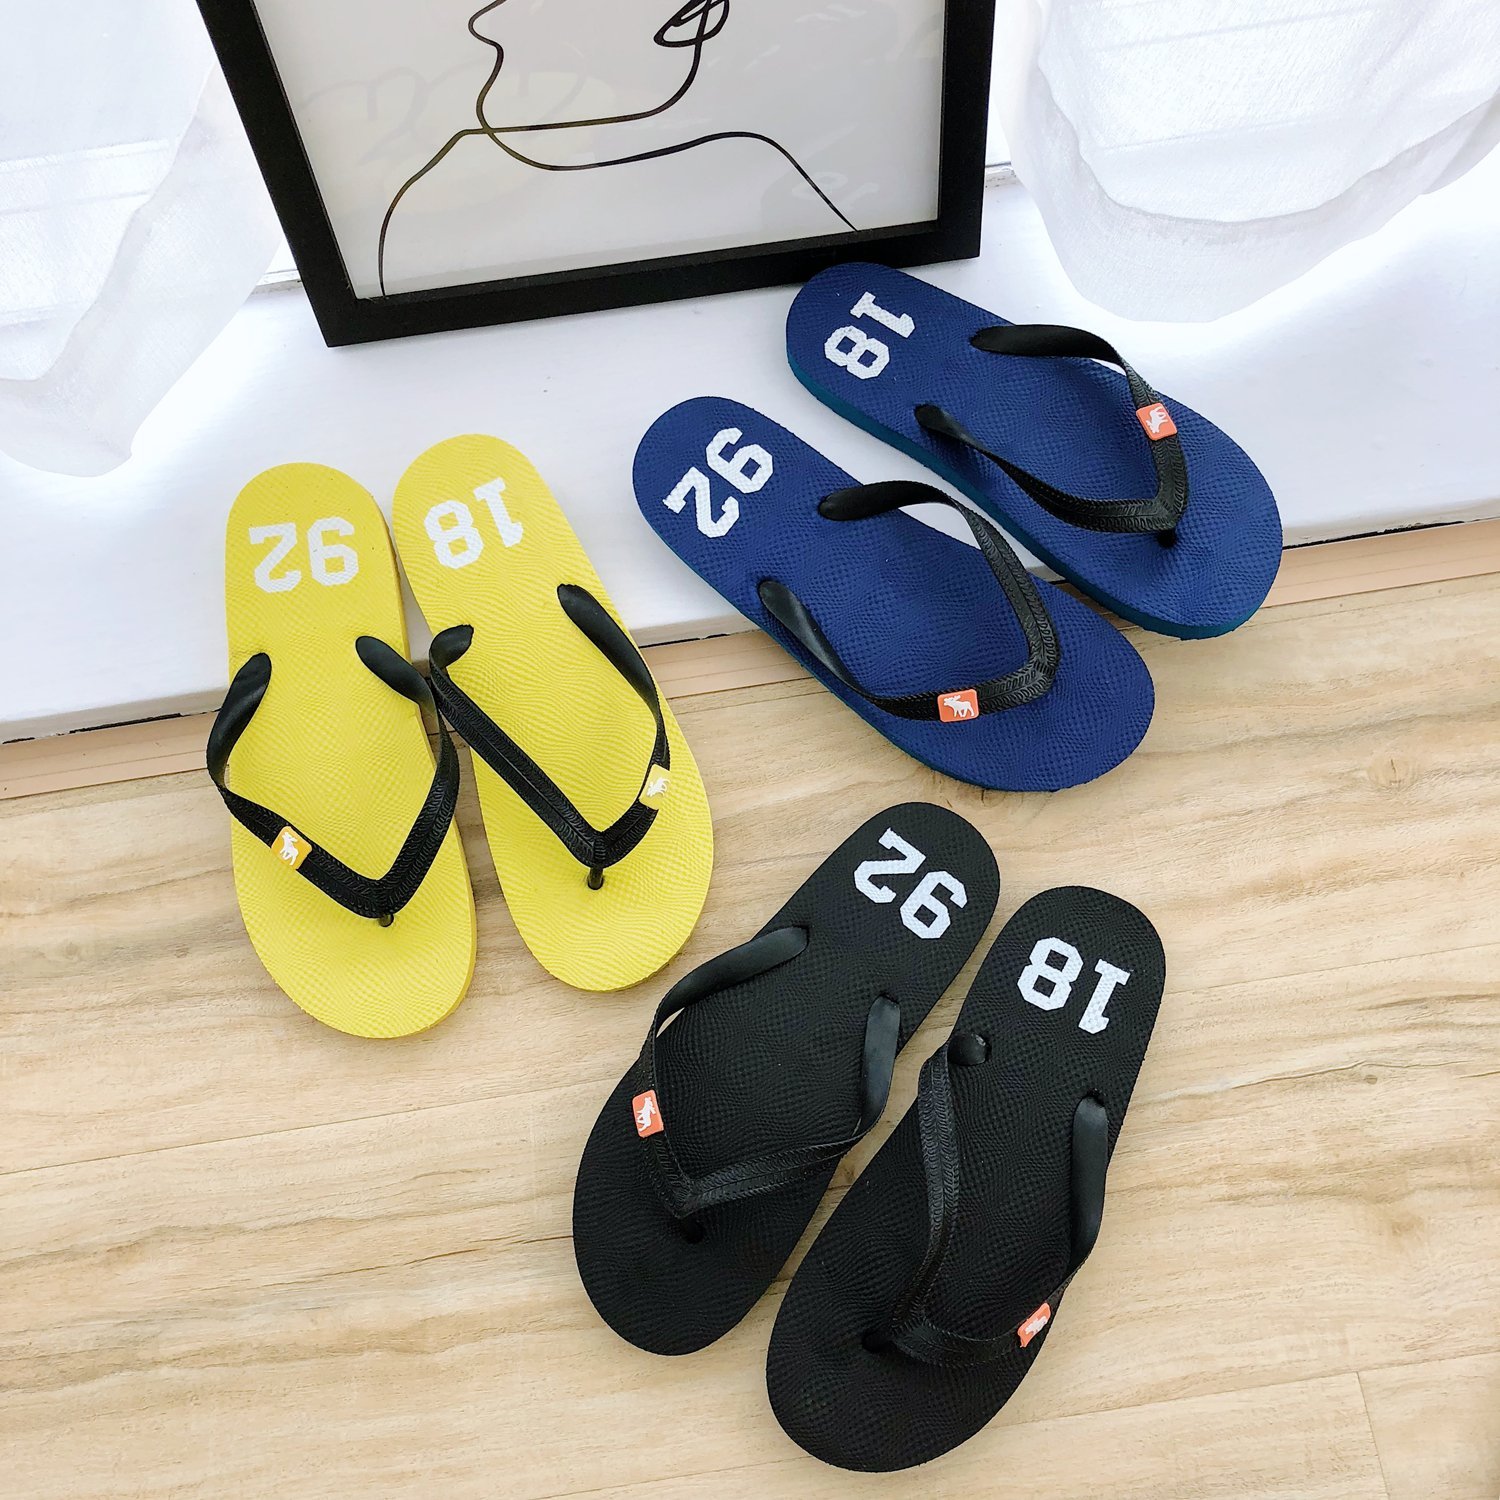 FINDSENSE品牌2019 新款 日本 沙灘 高品質 簡約 人字拖鞋 舒適橡膠底 時尚 涼鞋 休閒鞋 潮流鞋子